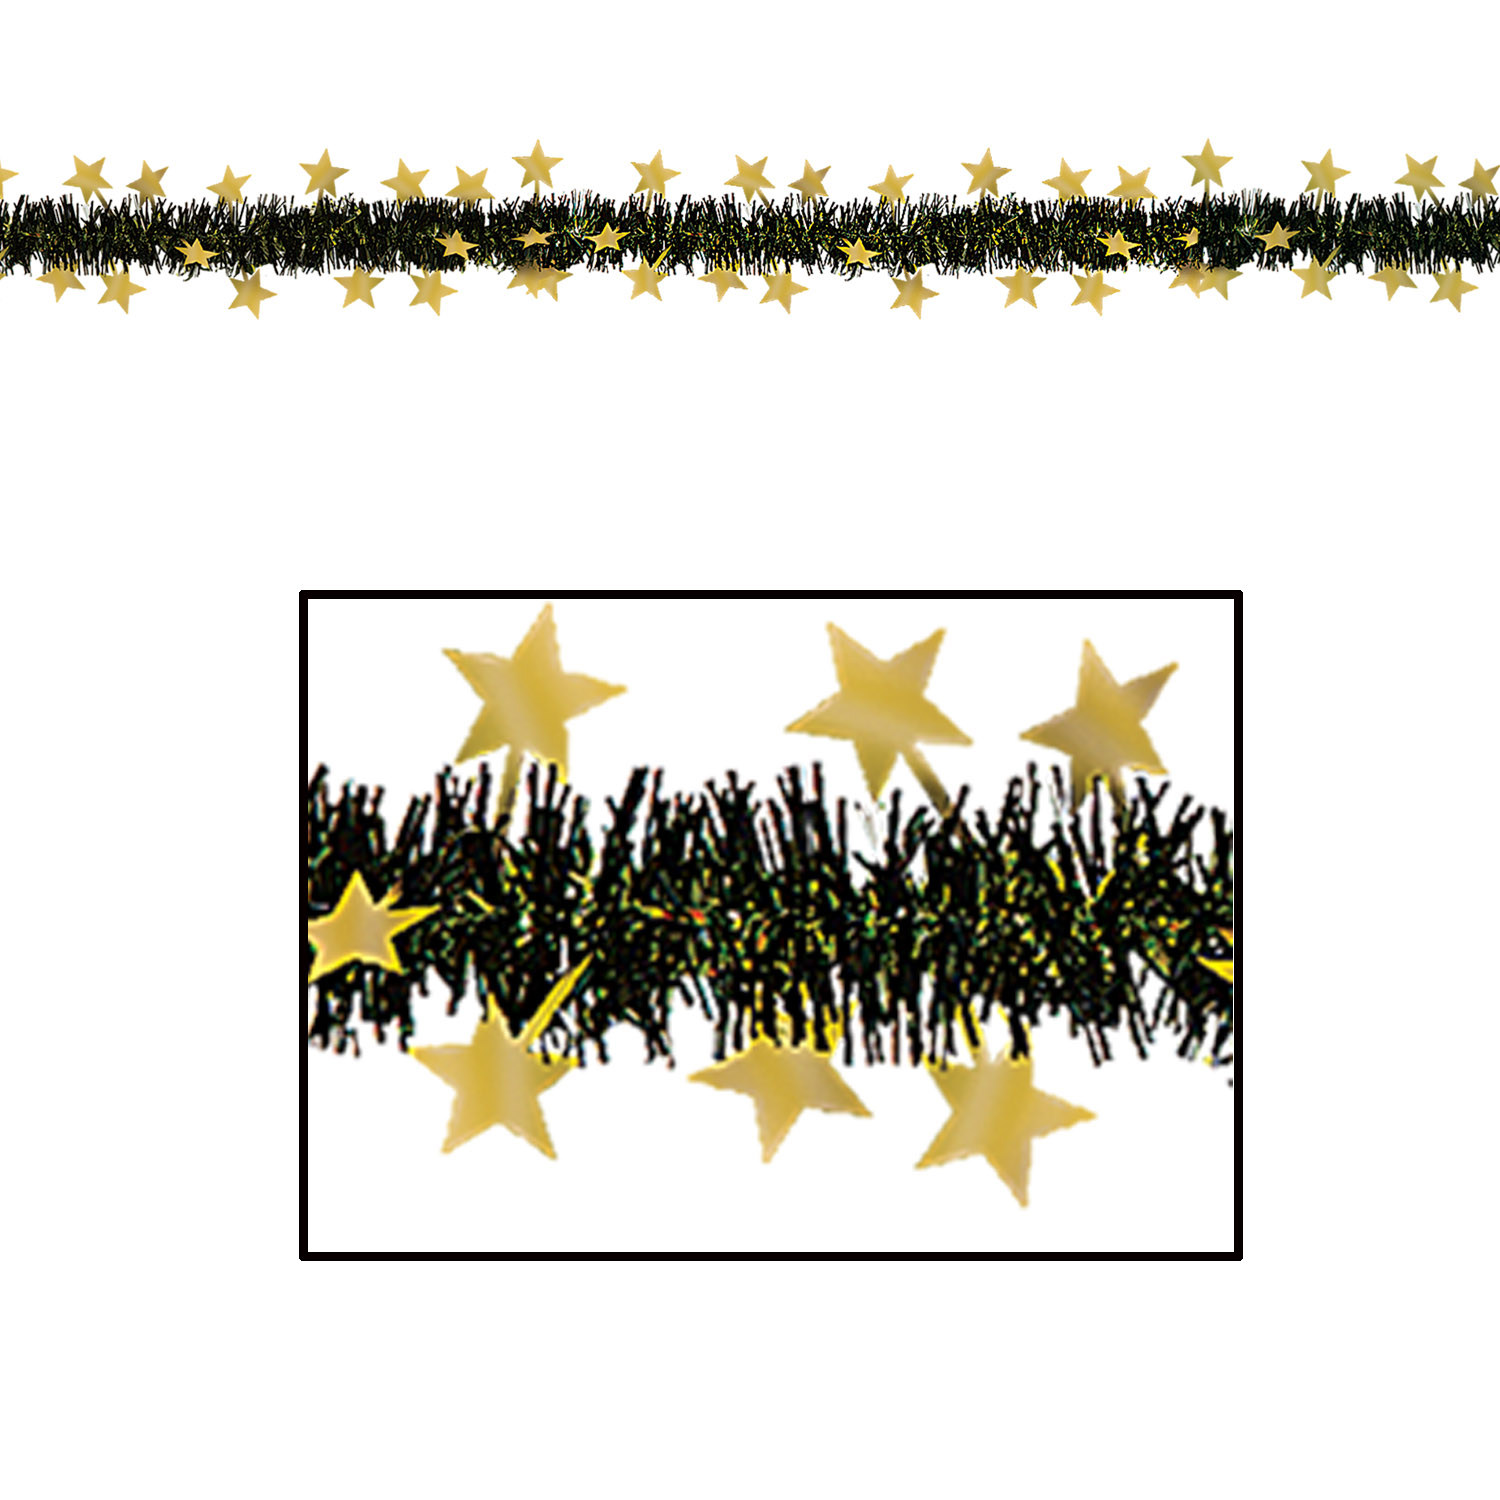 Black metallic fringe garland with gold stars.